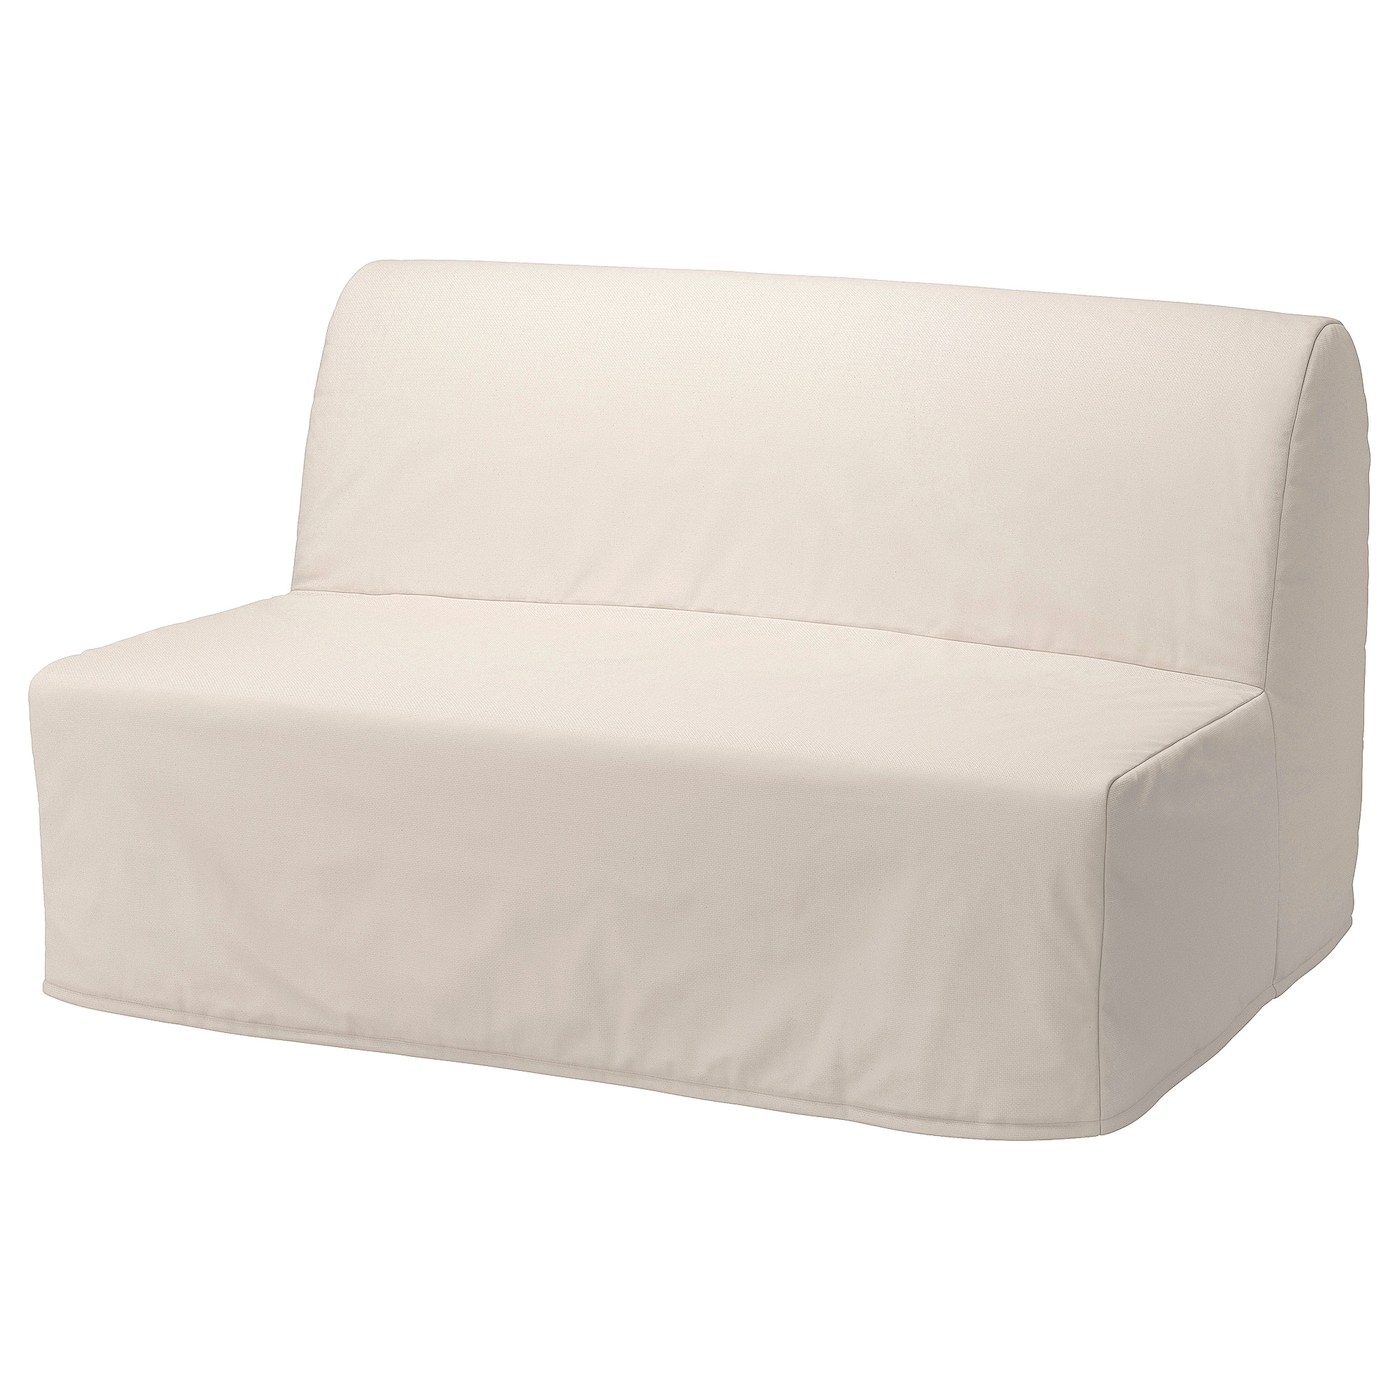 2-местный диван-кровать - IKEA LYCKSELE LÖVÅS/LOVAS/ЛИКСЕЛЕ ЛЕВОС ИКЕА, 87х100х142 см, белый